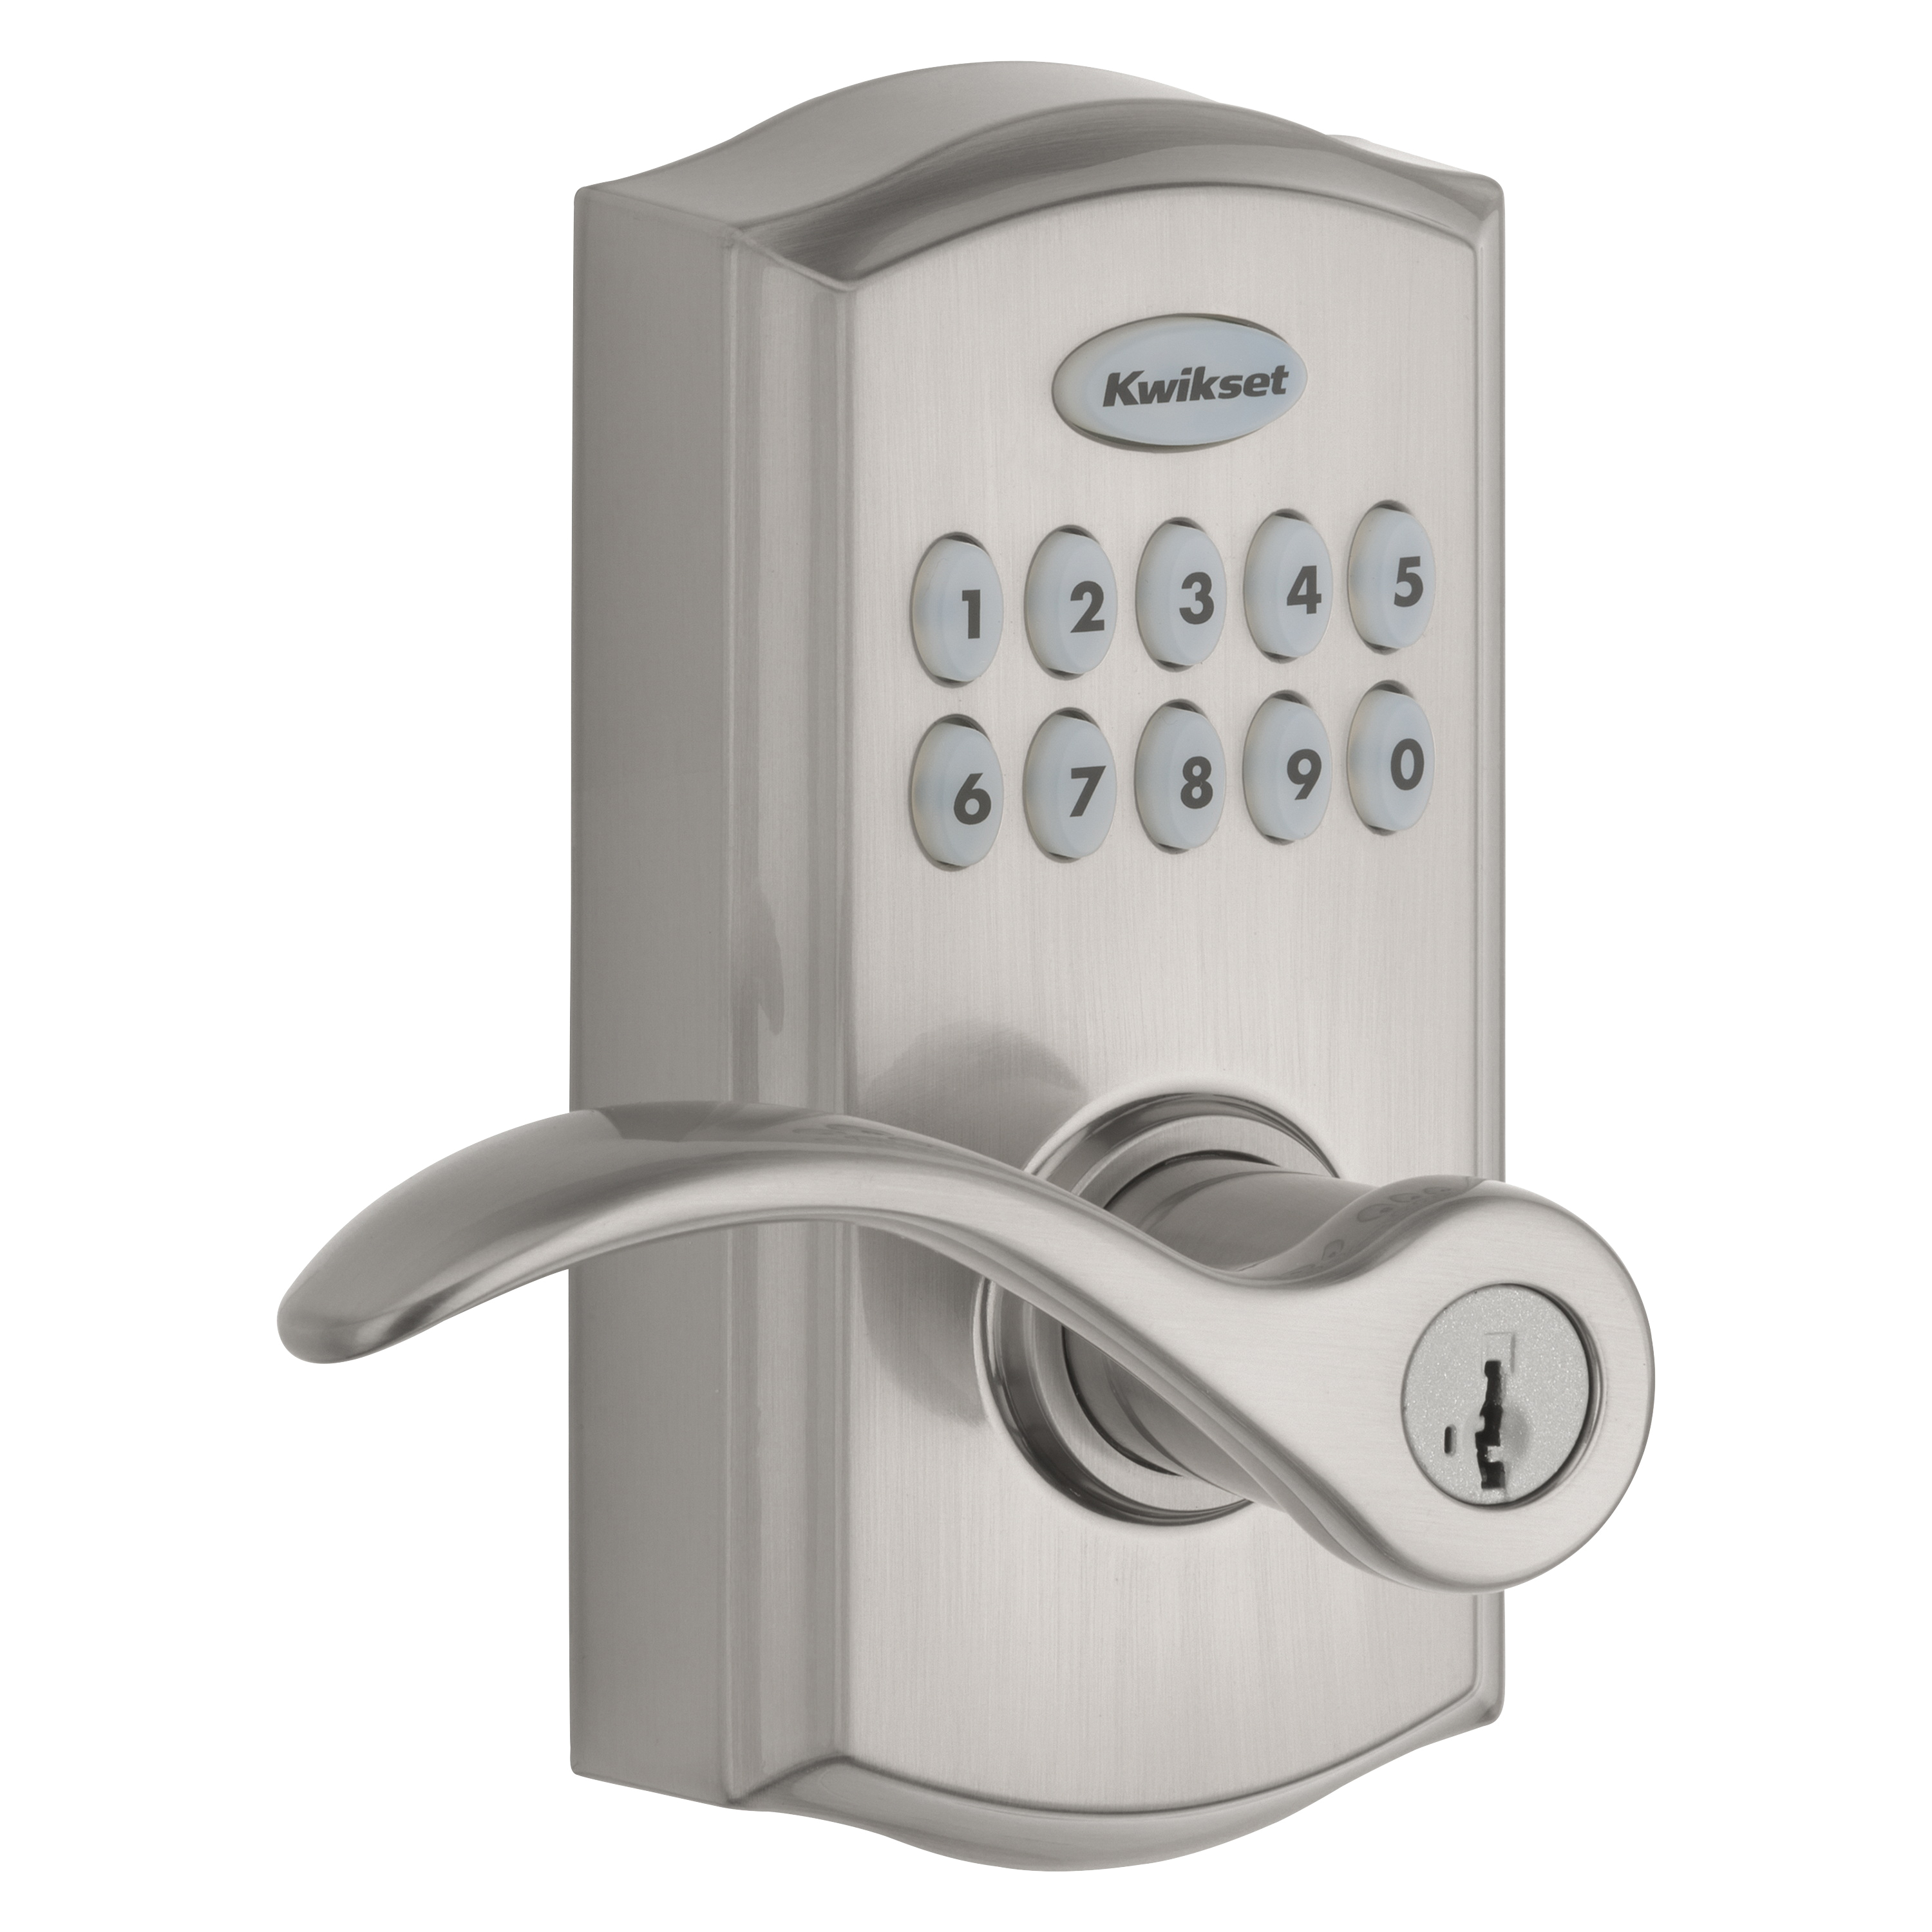 Kwikset 955PML 15 SMT CP Electronic Entry Lock, Satin Nickel, Commercial, AAA Grade, Zinc, Keypad Included